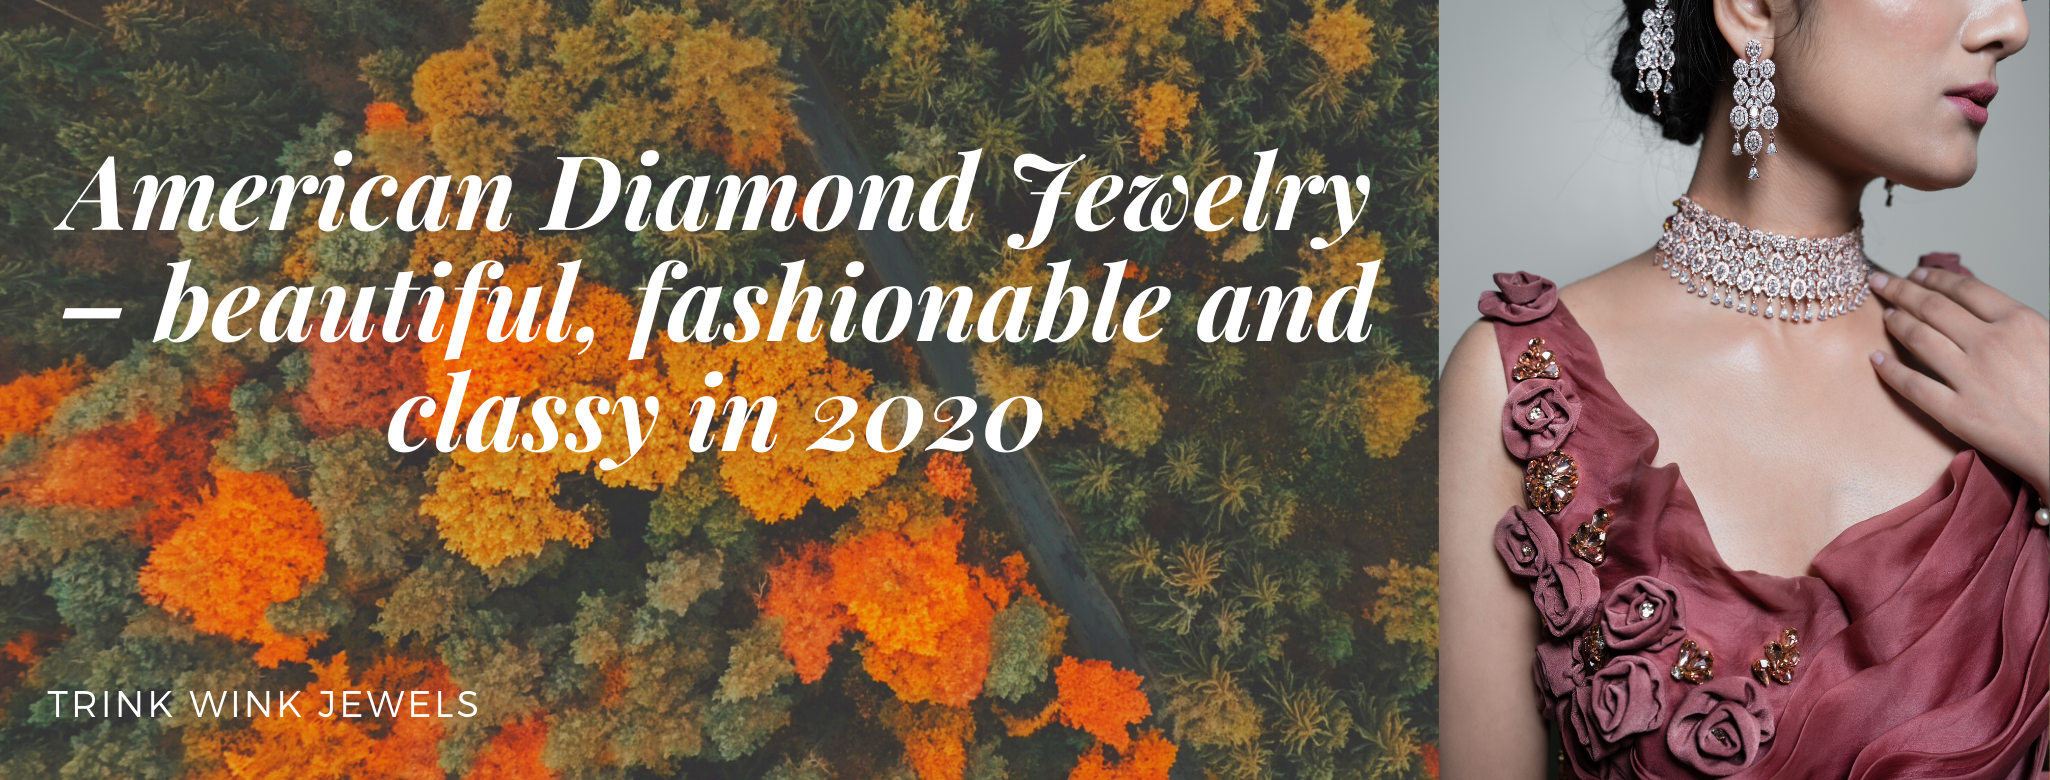 American Diamond Jewelry – beautiful, fashionable and classy in 2020